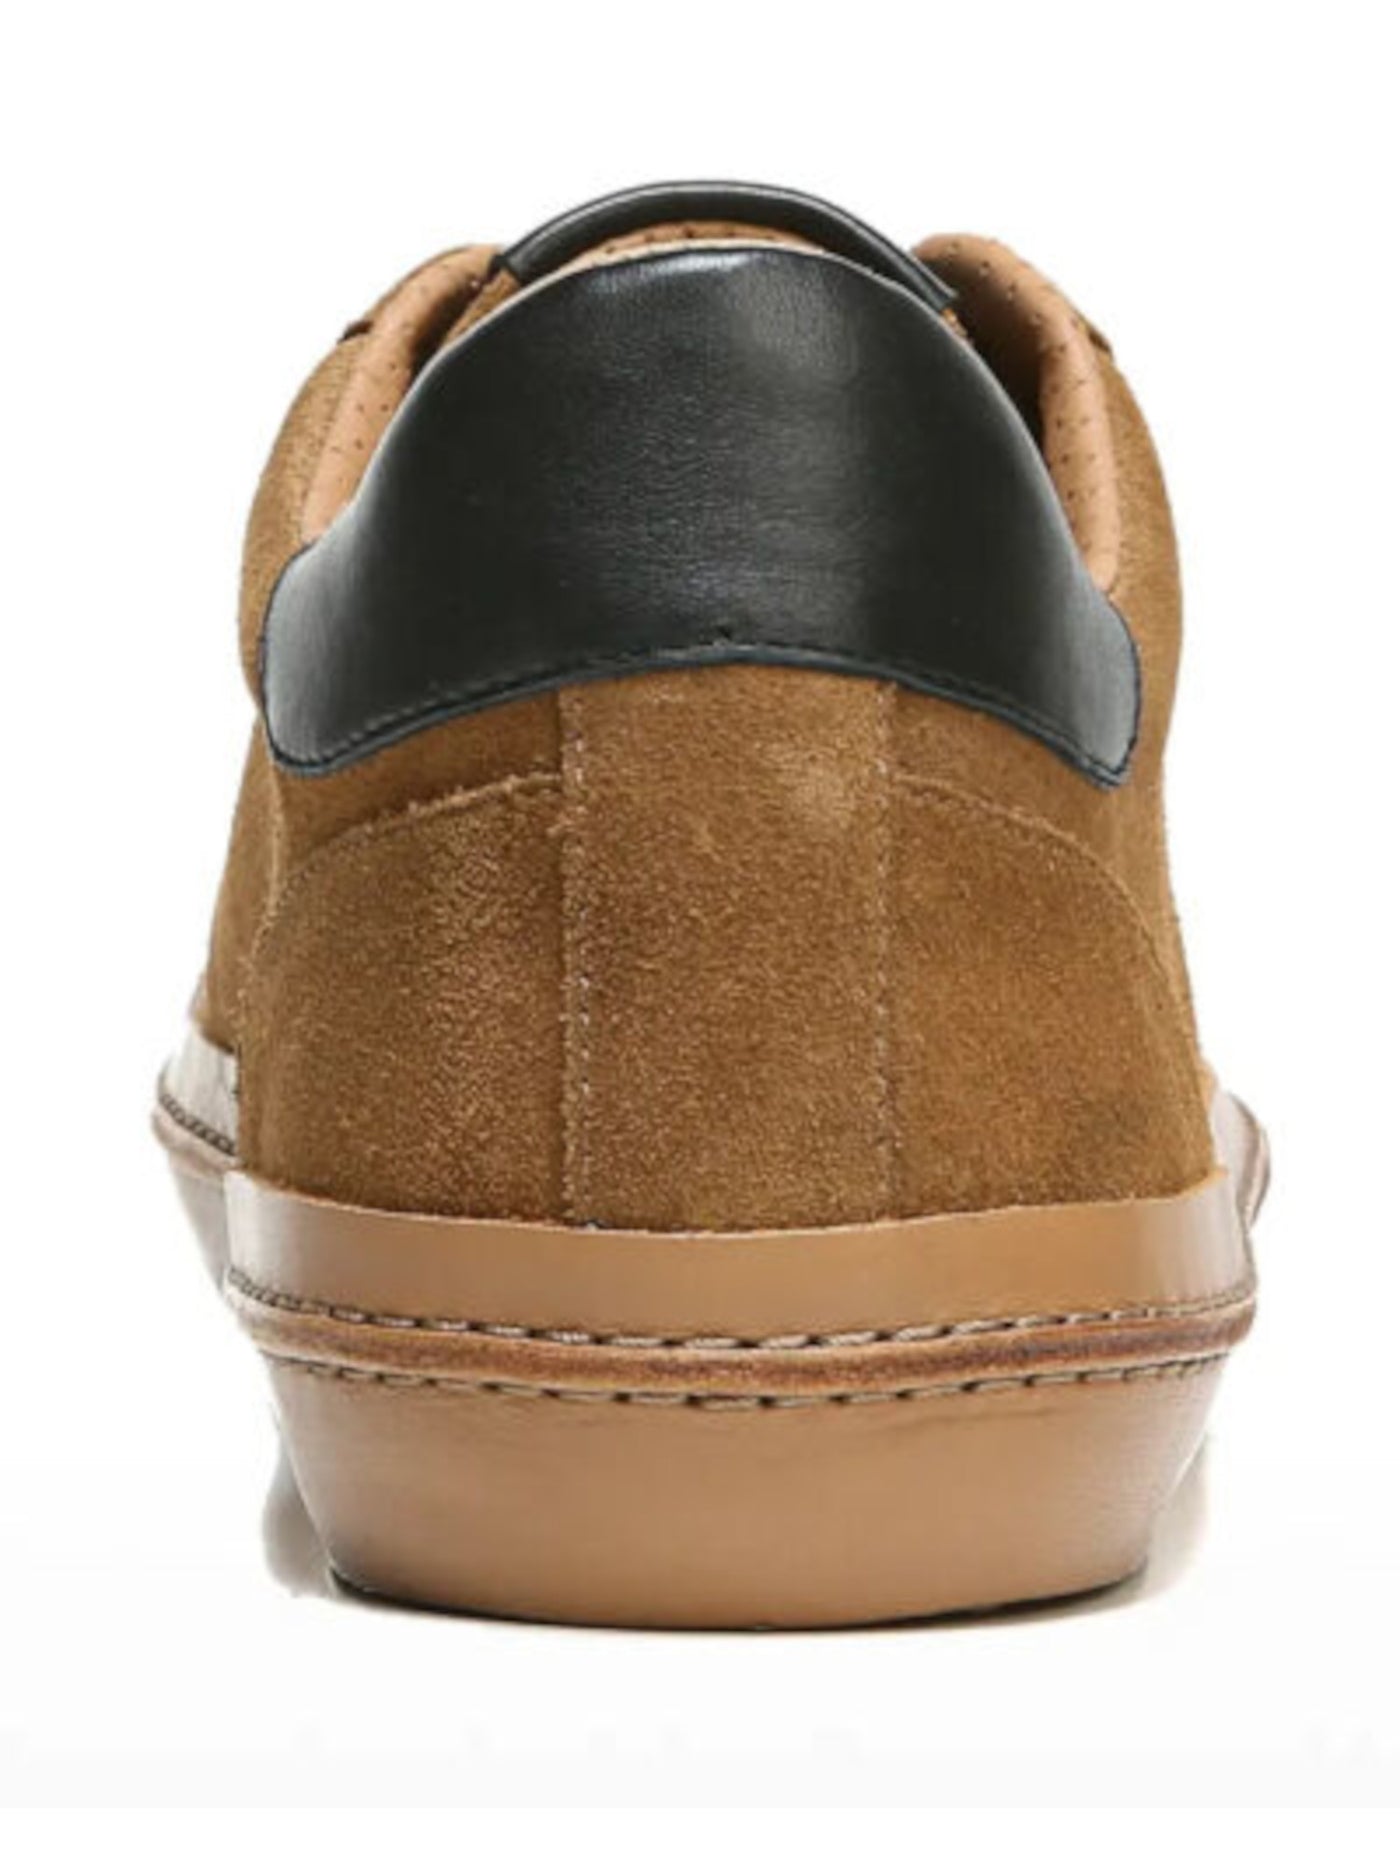 VINCE. Mens Brown Comfort Prescott Round Toe Platform Lace-Up Leather Athletic Sneakers Shoes 10 M